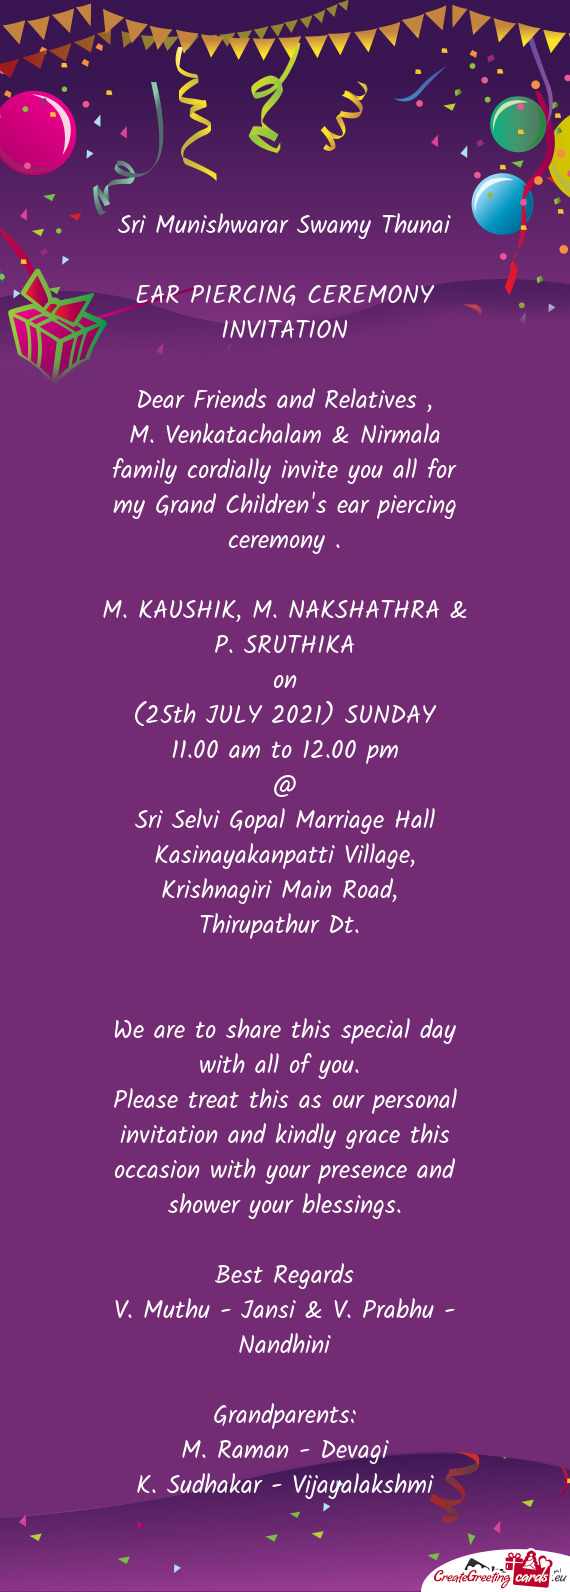 Venkatachalam & Nirmala family cordially invite you all for my Grand Children